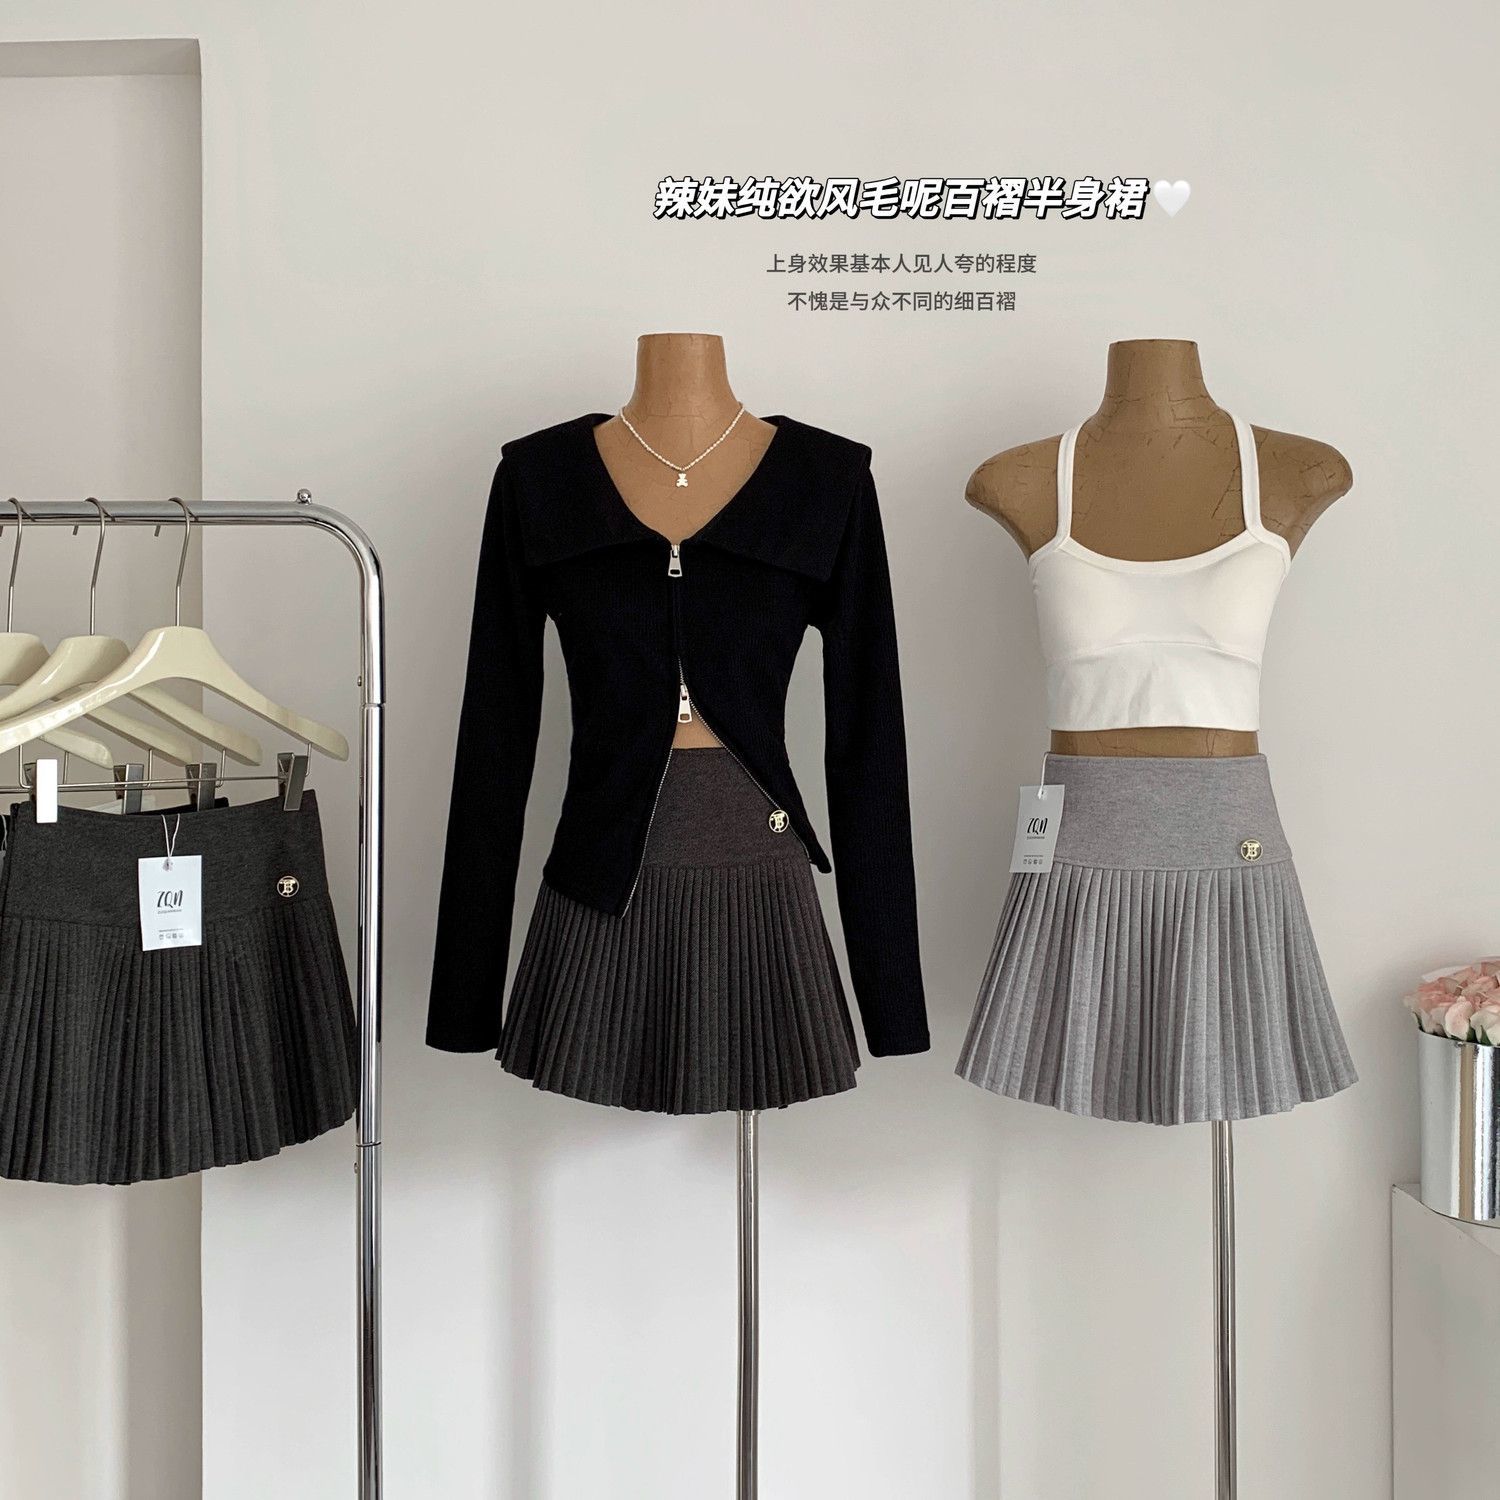 Woolen skirt women's autumn and winter small fragrance style high-end a-line pleated skirt high-waisted slimming versatile short skirt